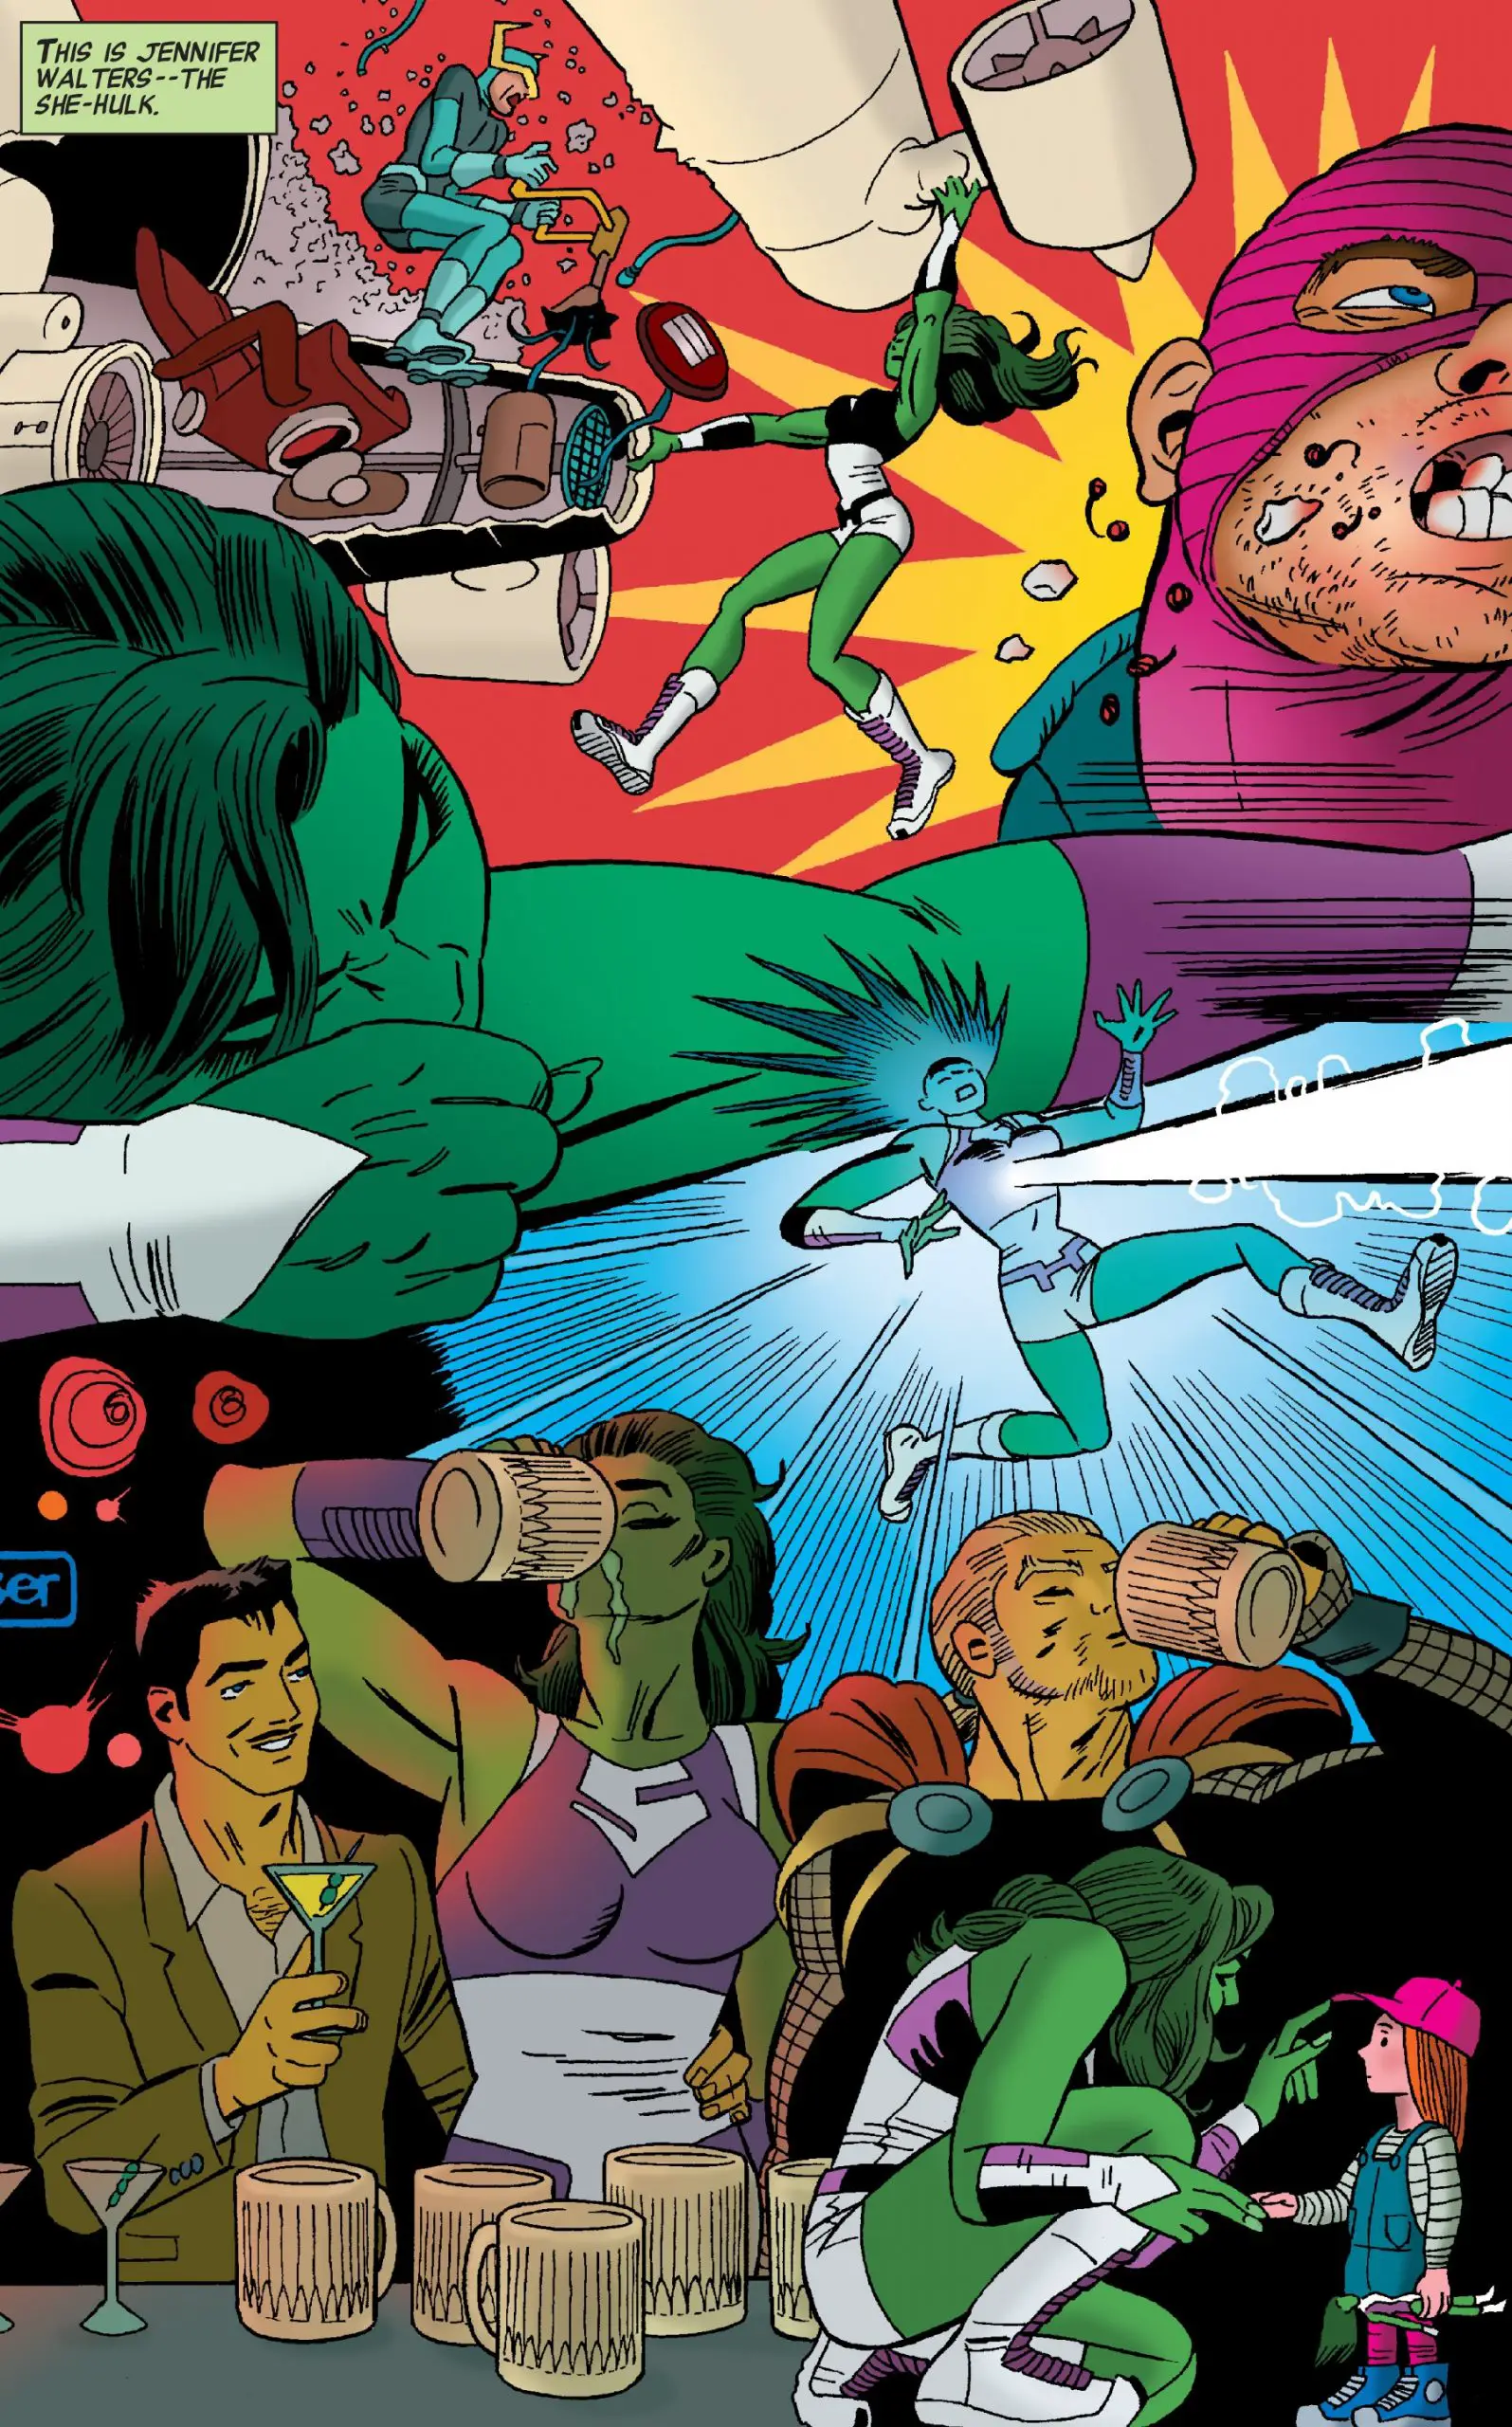 She-Hulk Law and Disorder splash page